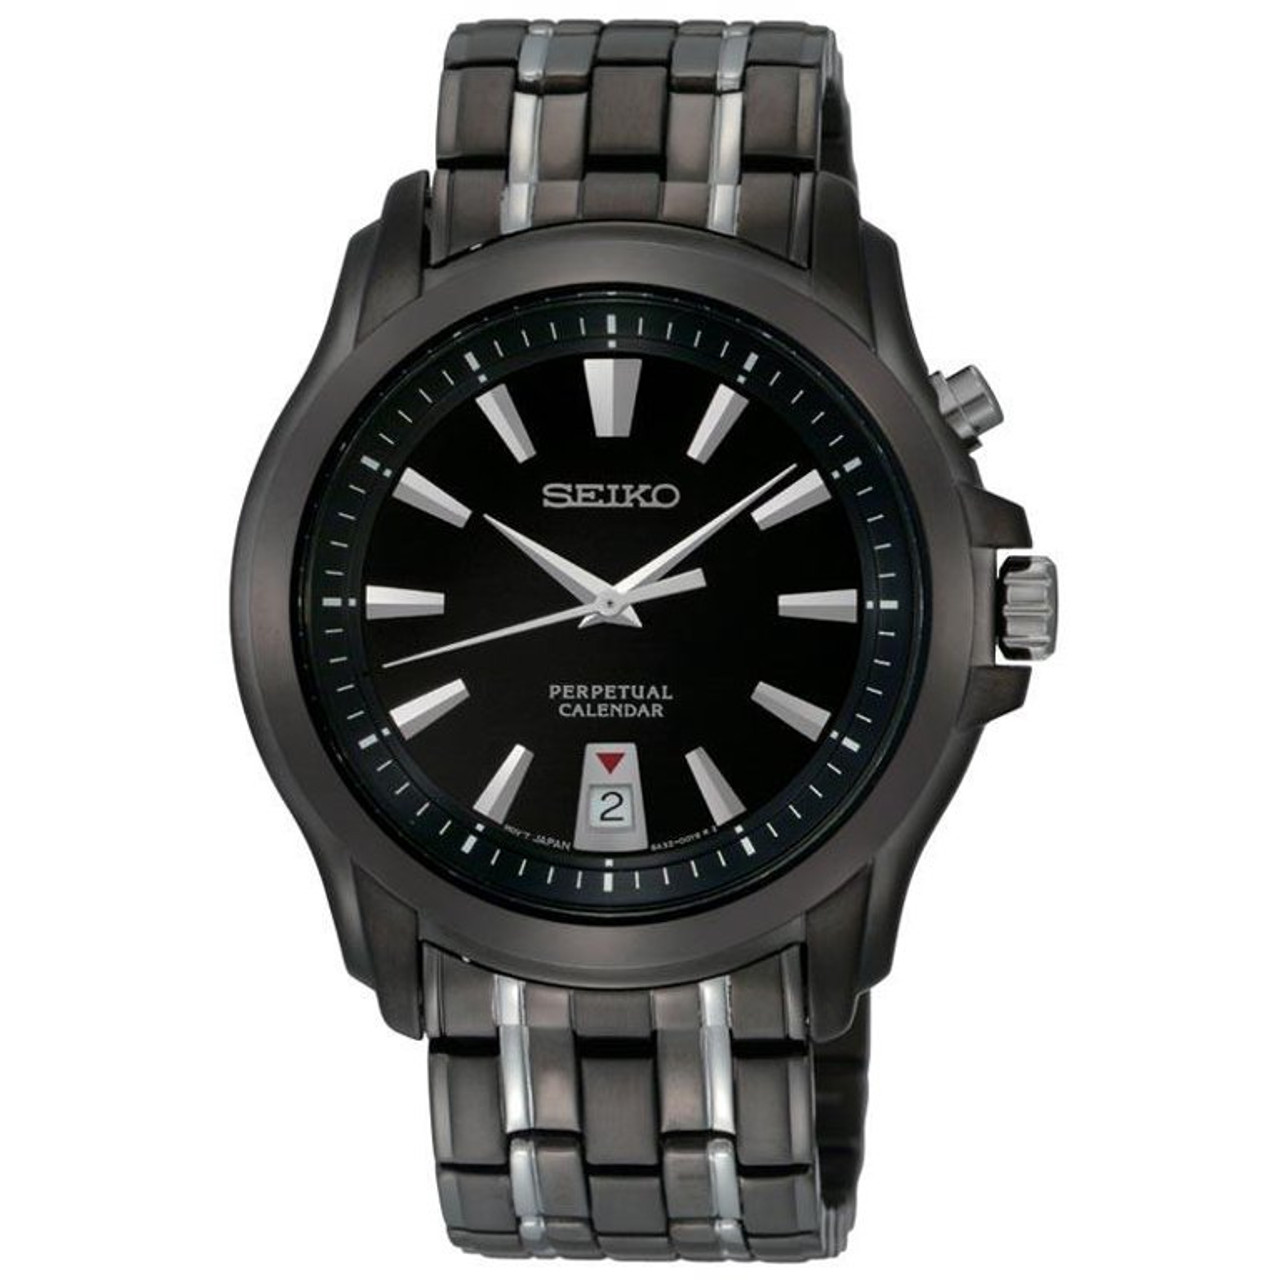 Seiko™ Men's Perpetual Calendar Stainless Steel Watch - UntilGone.com